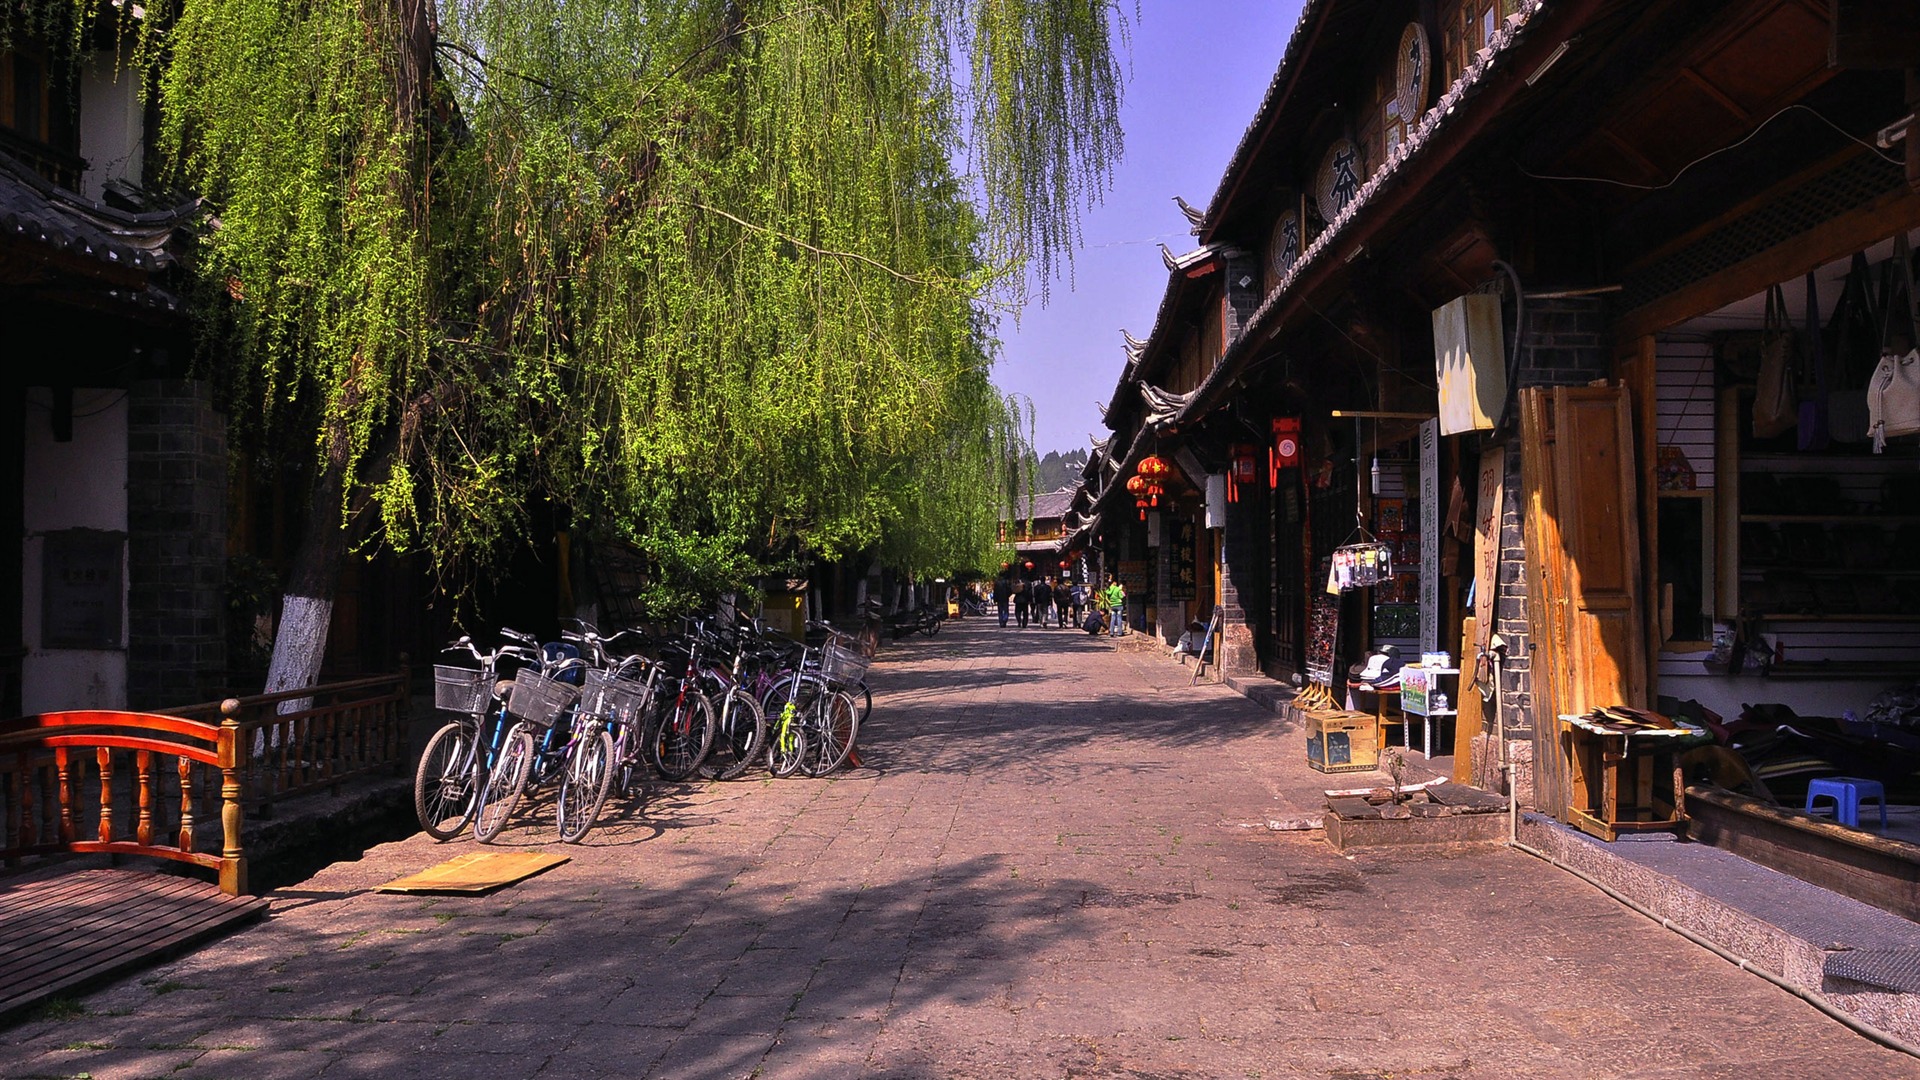 Lijiang ancient town atmosphere (2) (old Hong OK works) #21 - 1920x1080